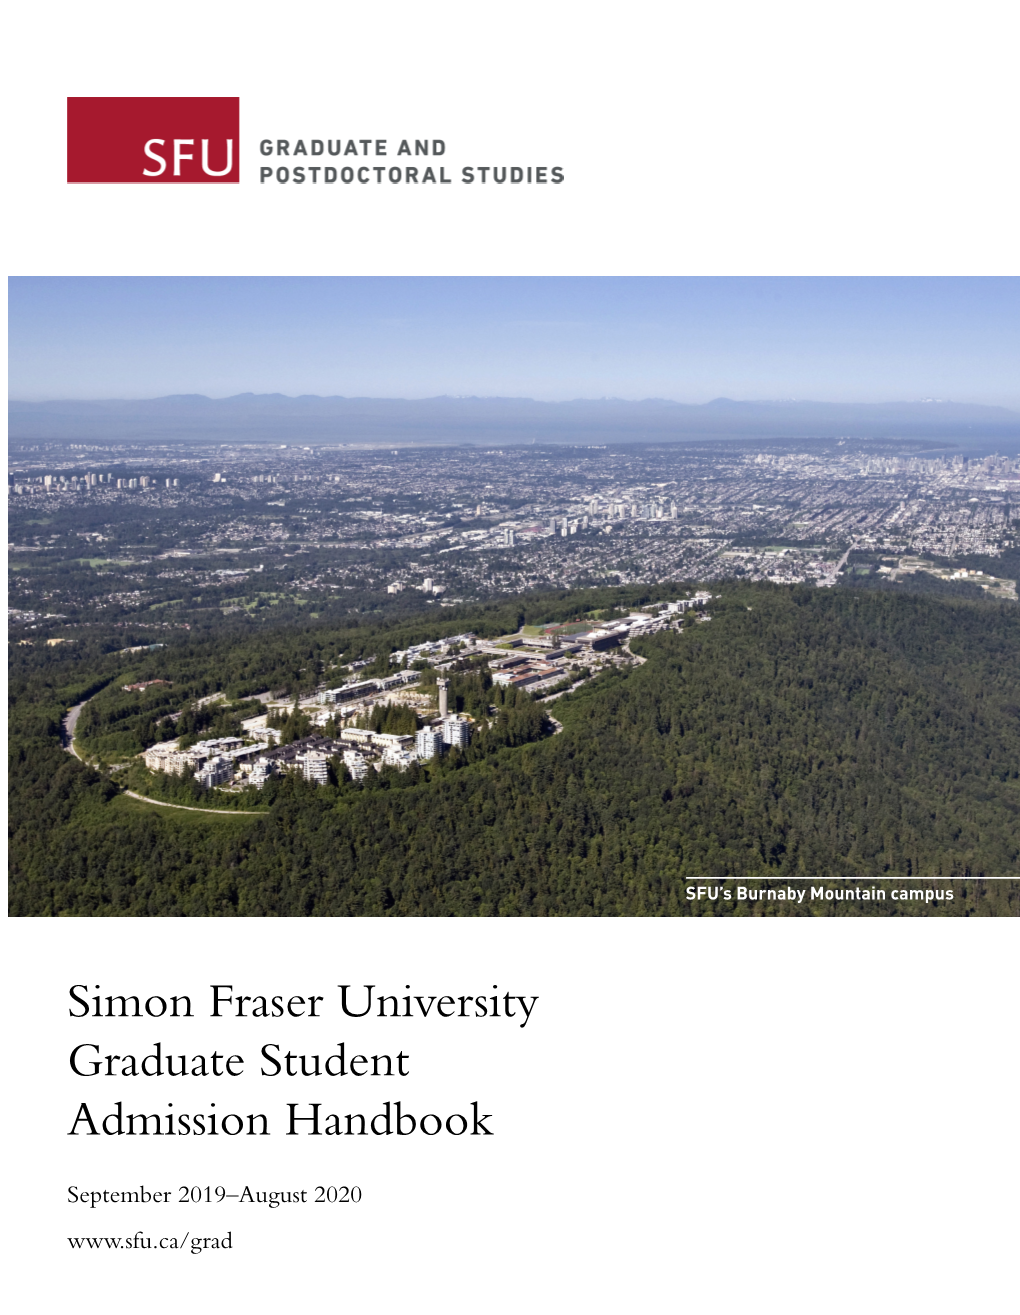 Simon Fraser University Graduate Student Admission Handbook